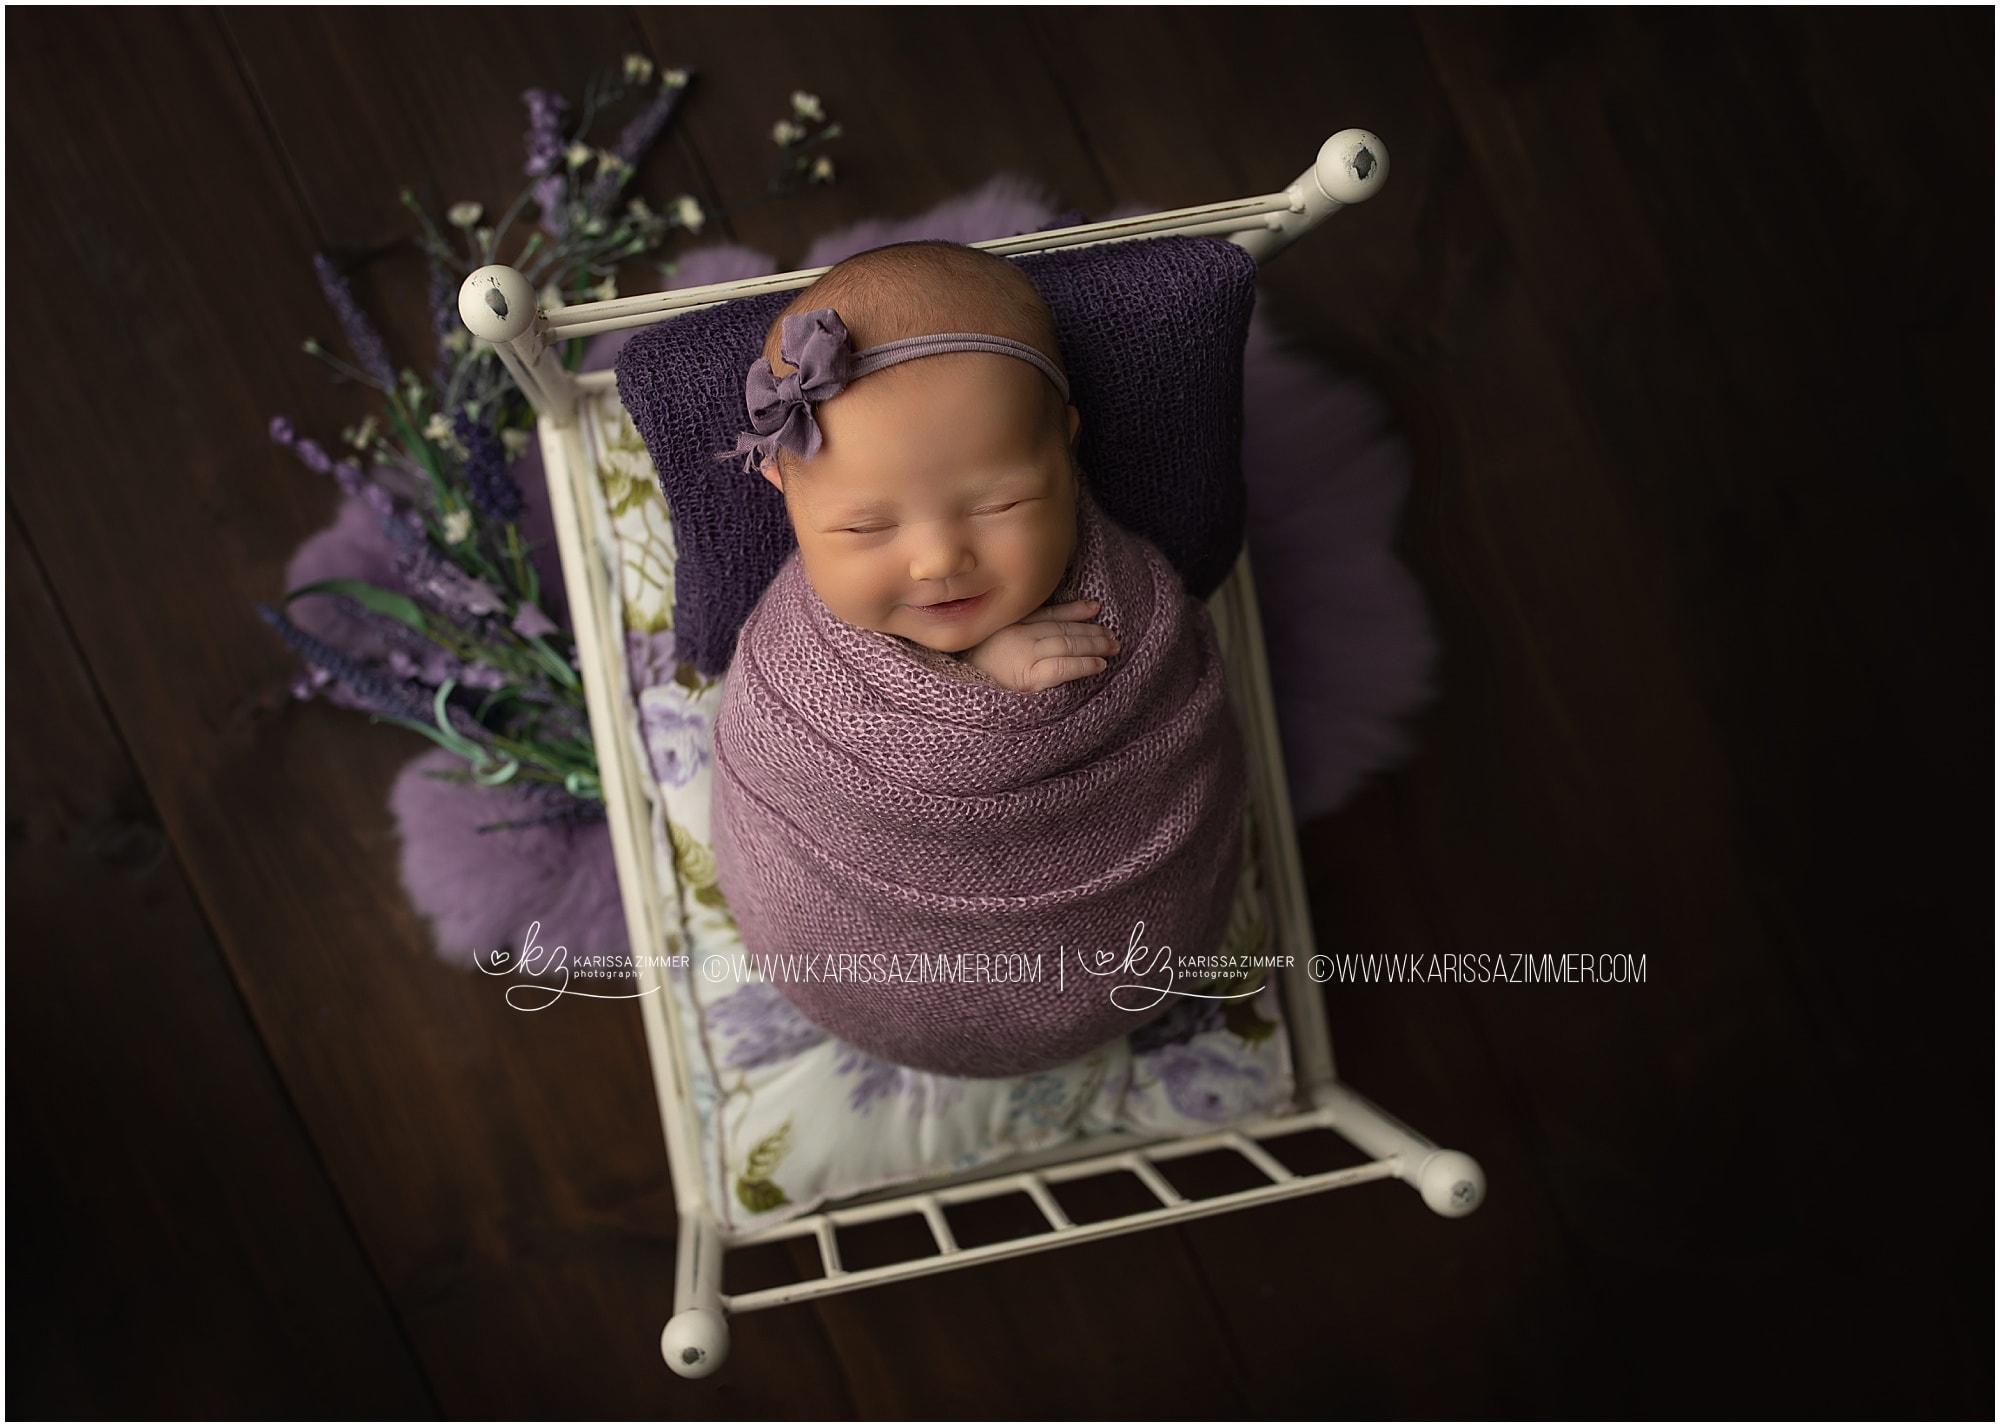 Mechanicsburg Professional newborn photographer captures image of newborn baby girl smiling during photoshoot in studio